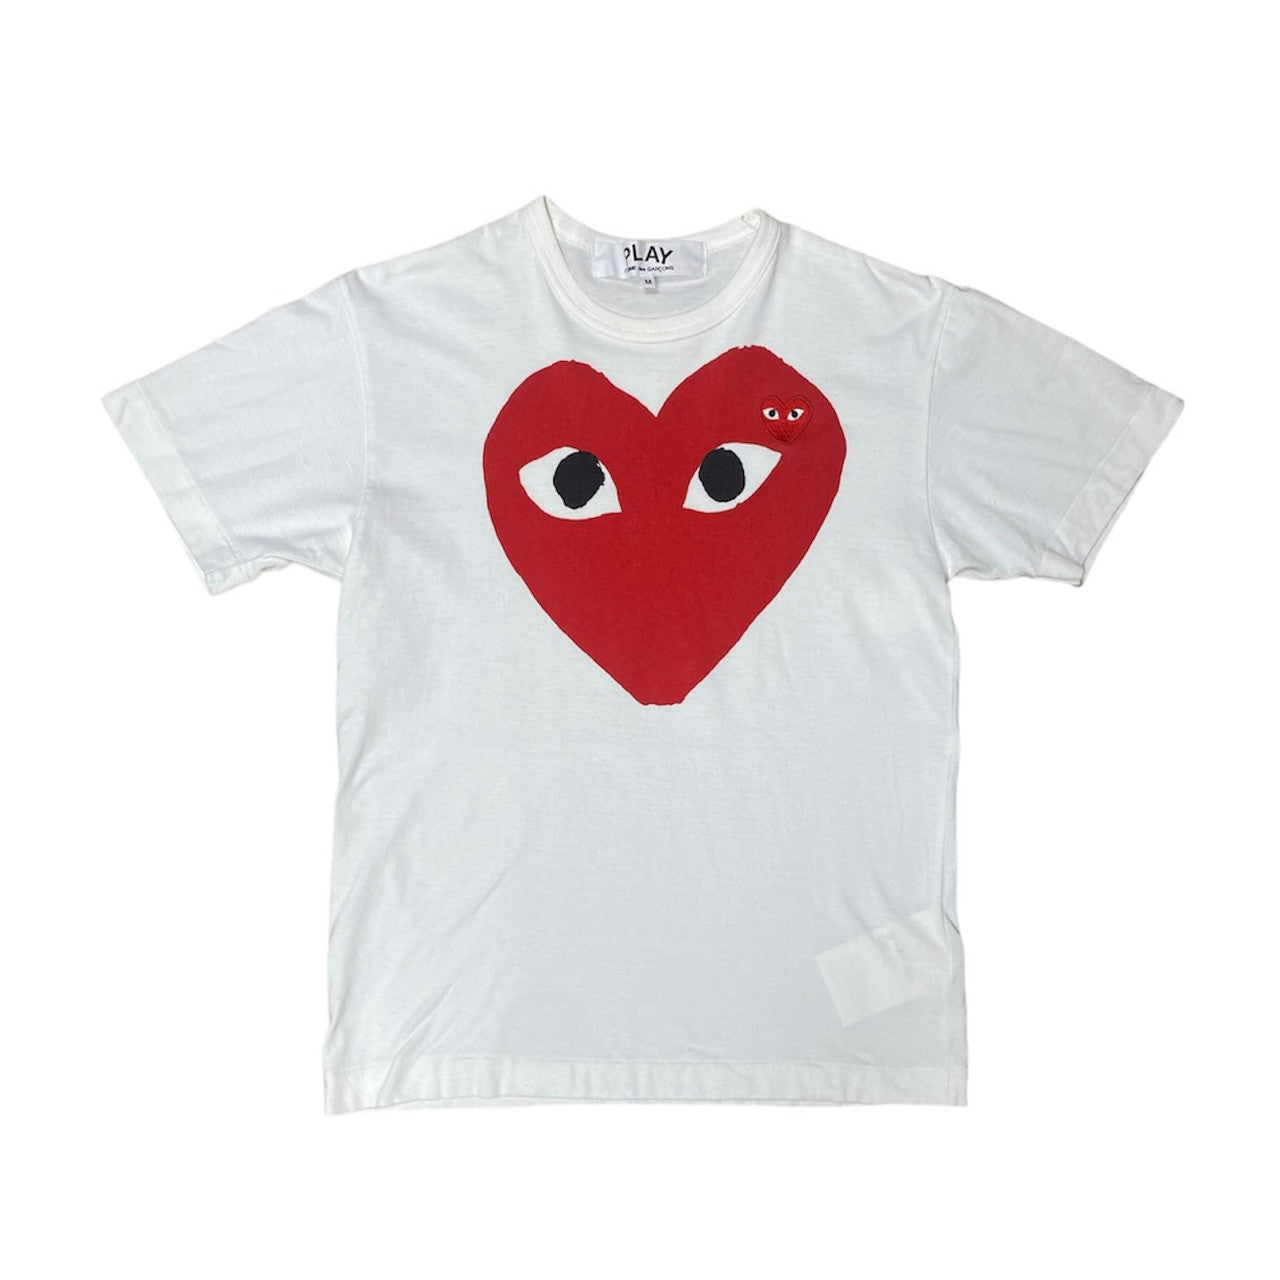 Comme Des Garcons Play Red Heart Emblem T-Shirt White